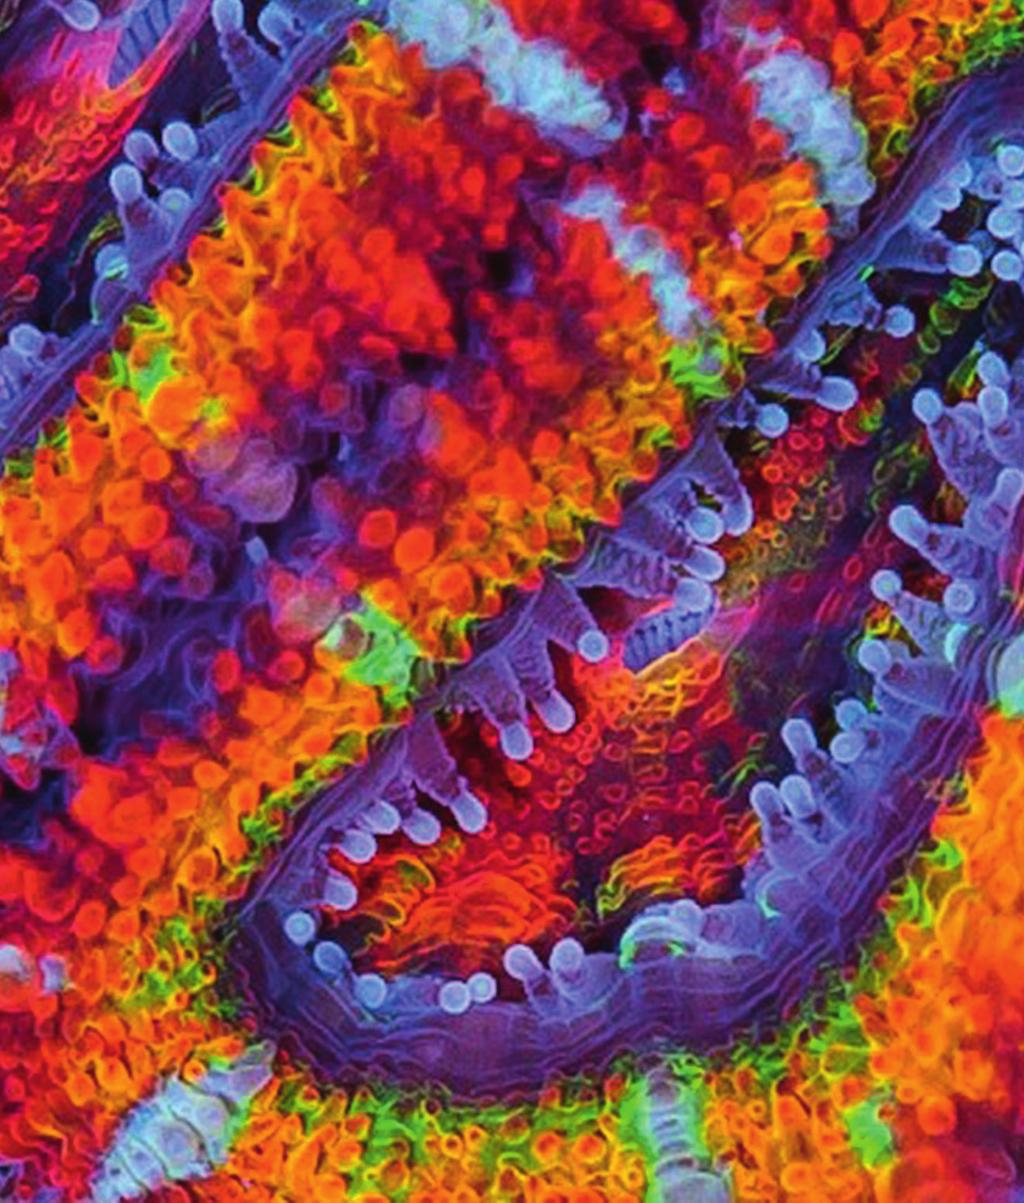 Vibrant and Unique Coral Coloration Made